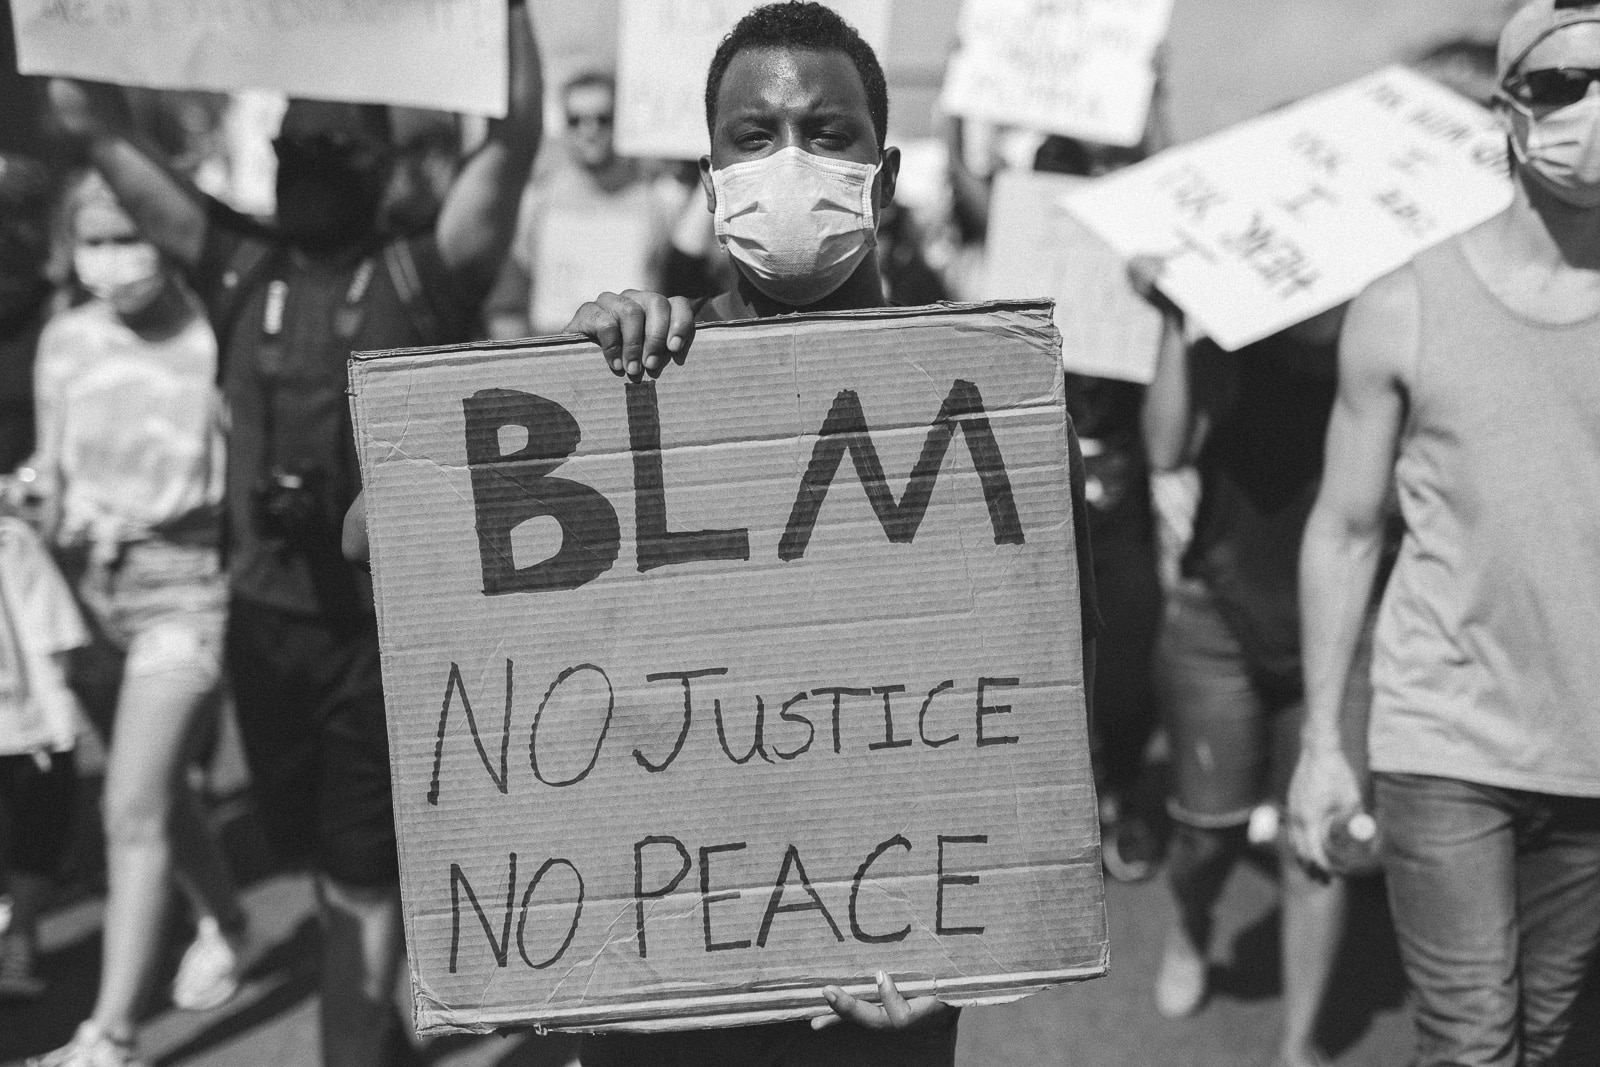 Black Lives Matter Protest in Dallas. Texas